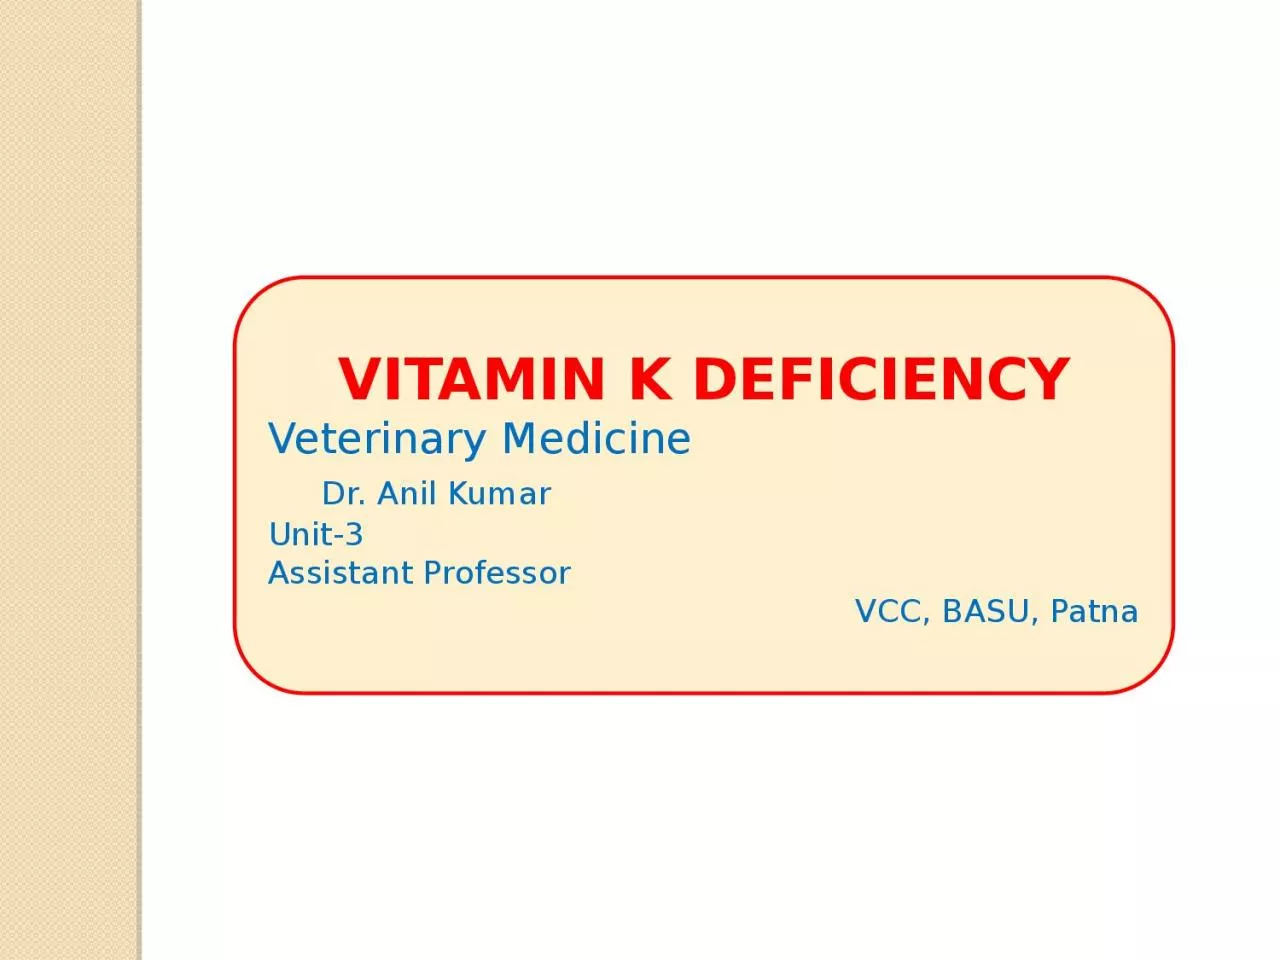 VITAMIN K DEFICIENCY Veterinary Medicine